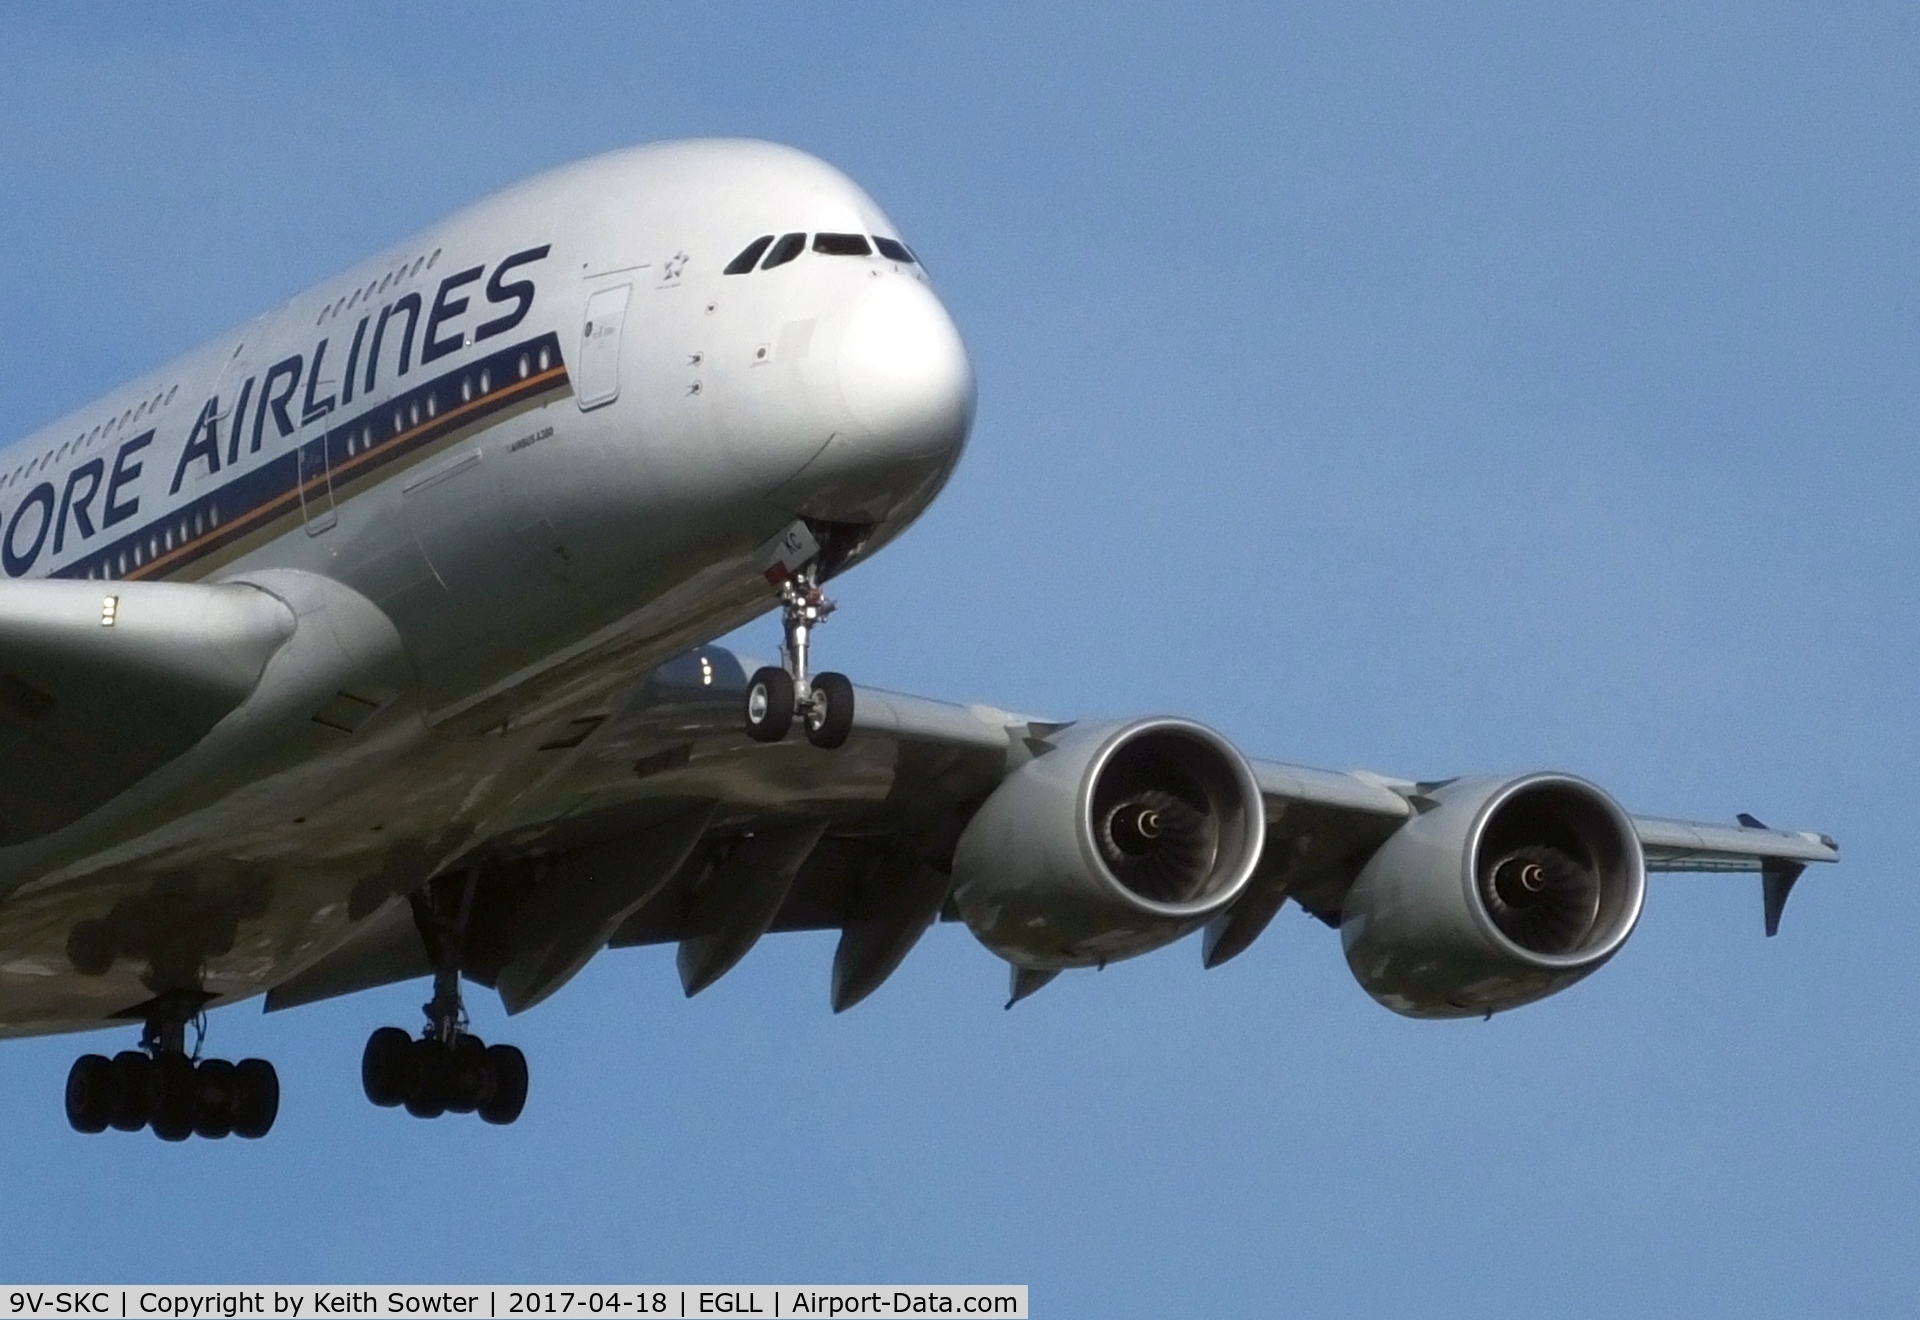 9V-SKC, 2006 Airbus A380-841 C/N 006, Short finals to land 09L at Heathrow